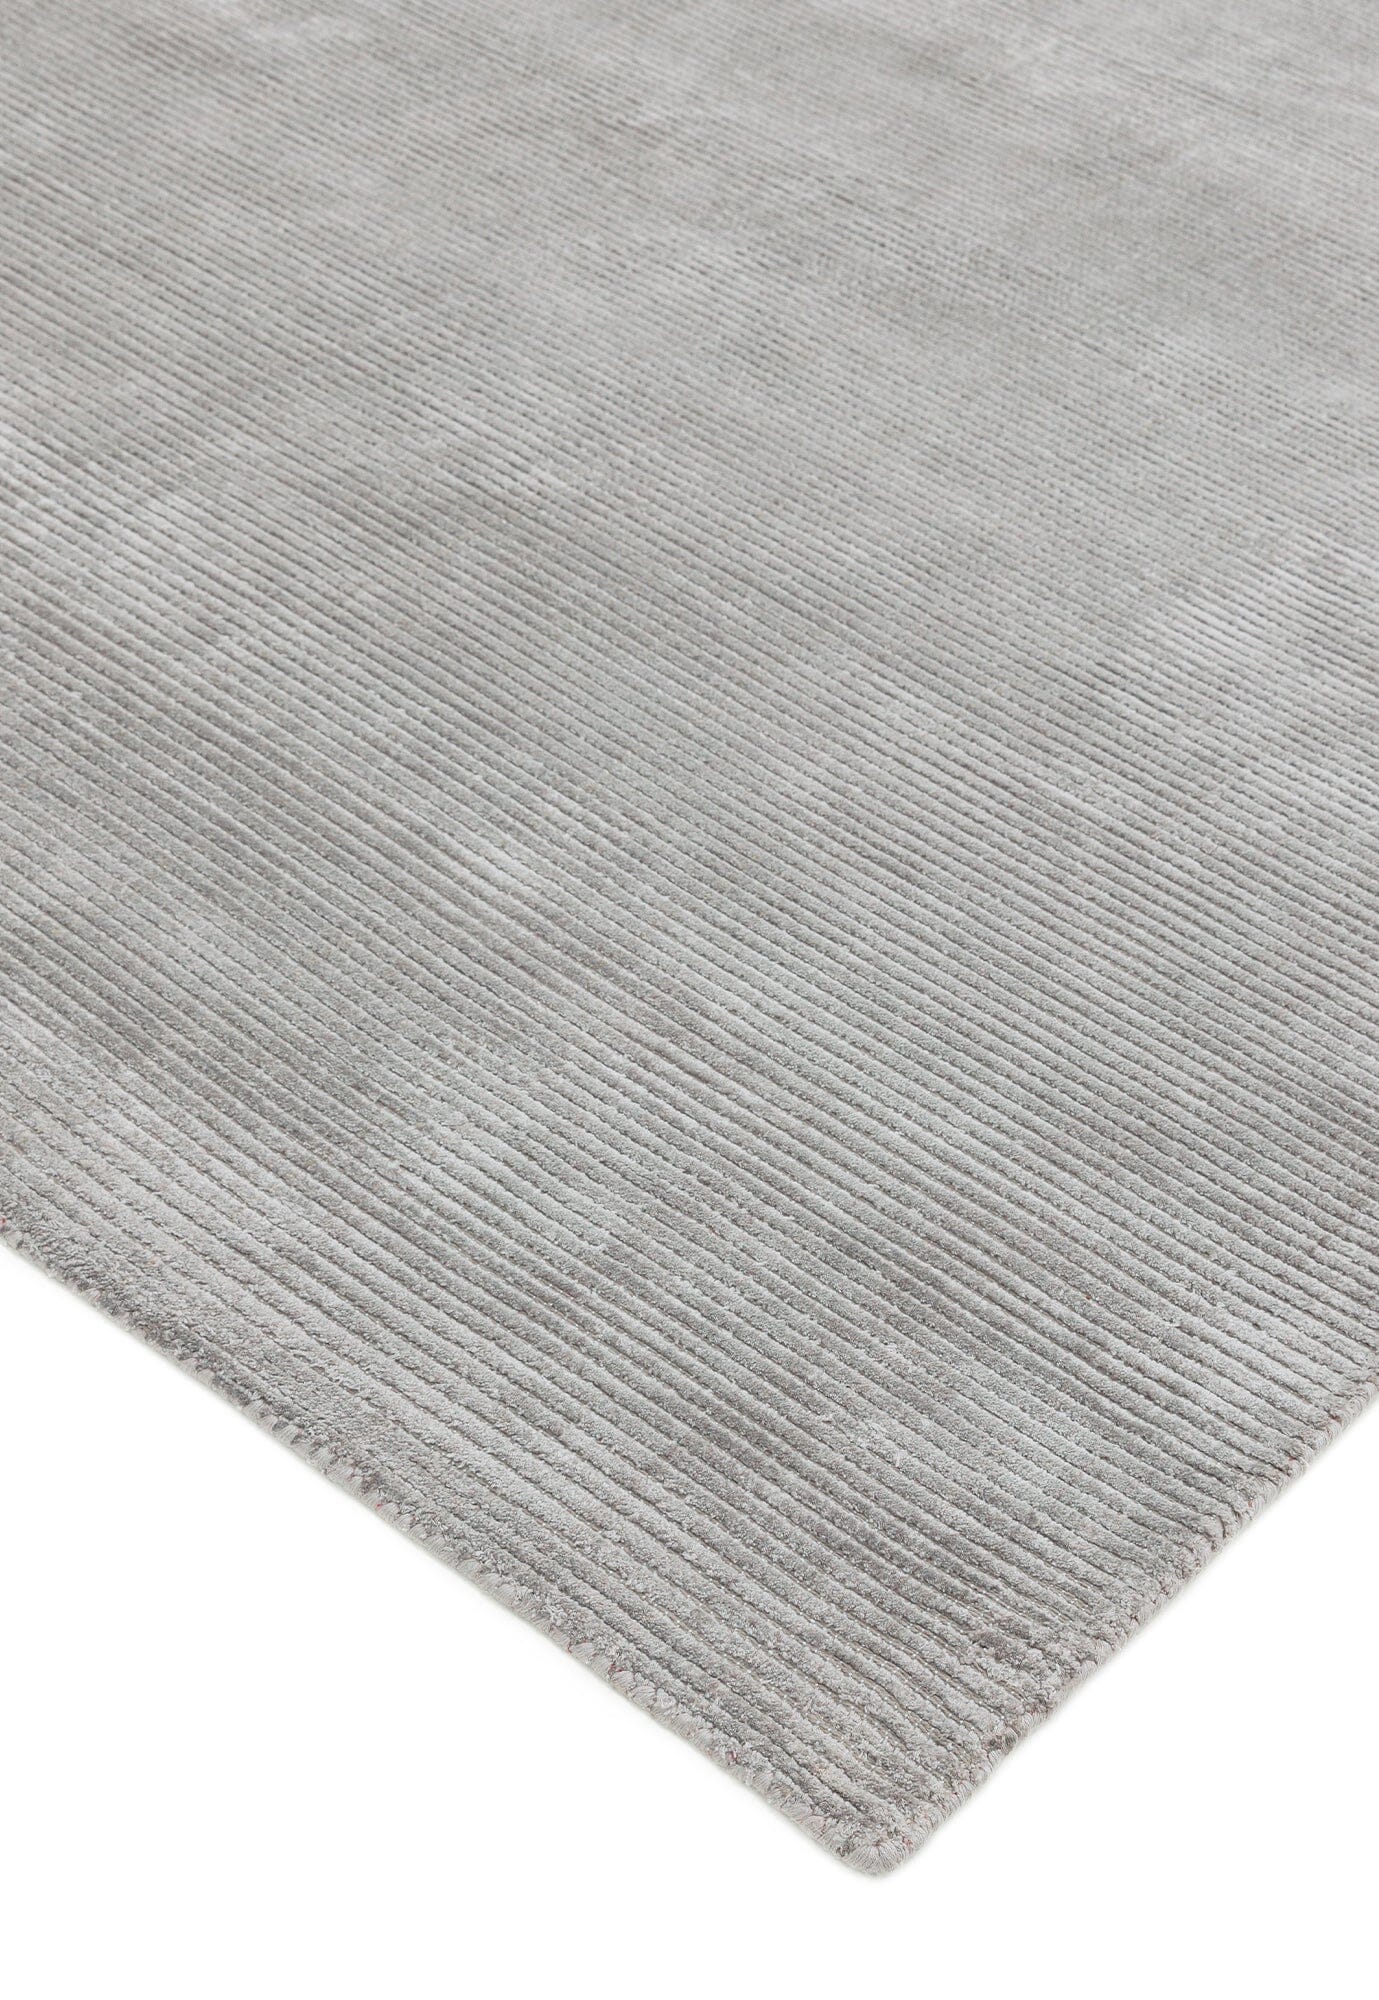  Asiatic Carpets-Asiatic Carpets Reko Hand Woven Rug Silver - 160 x 230cm-Grey, Silver 437 